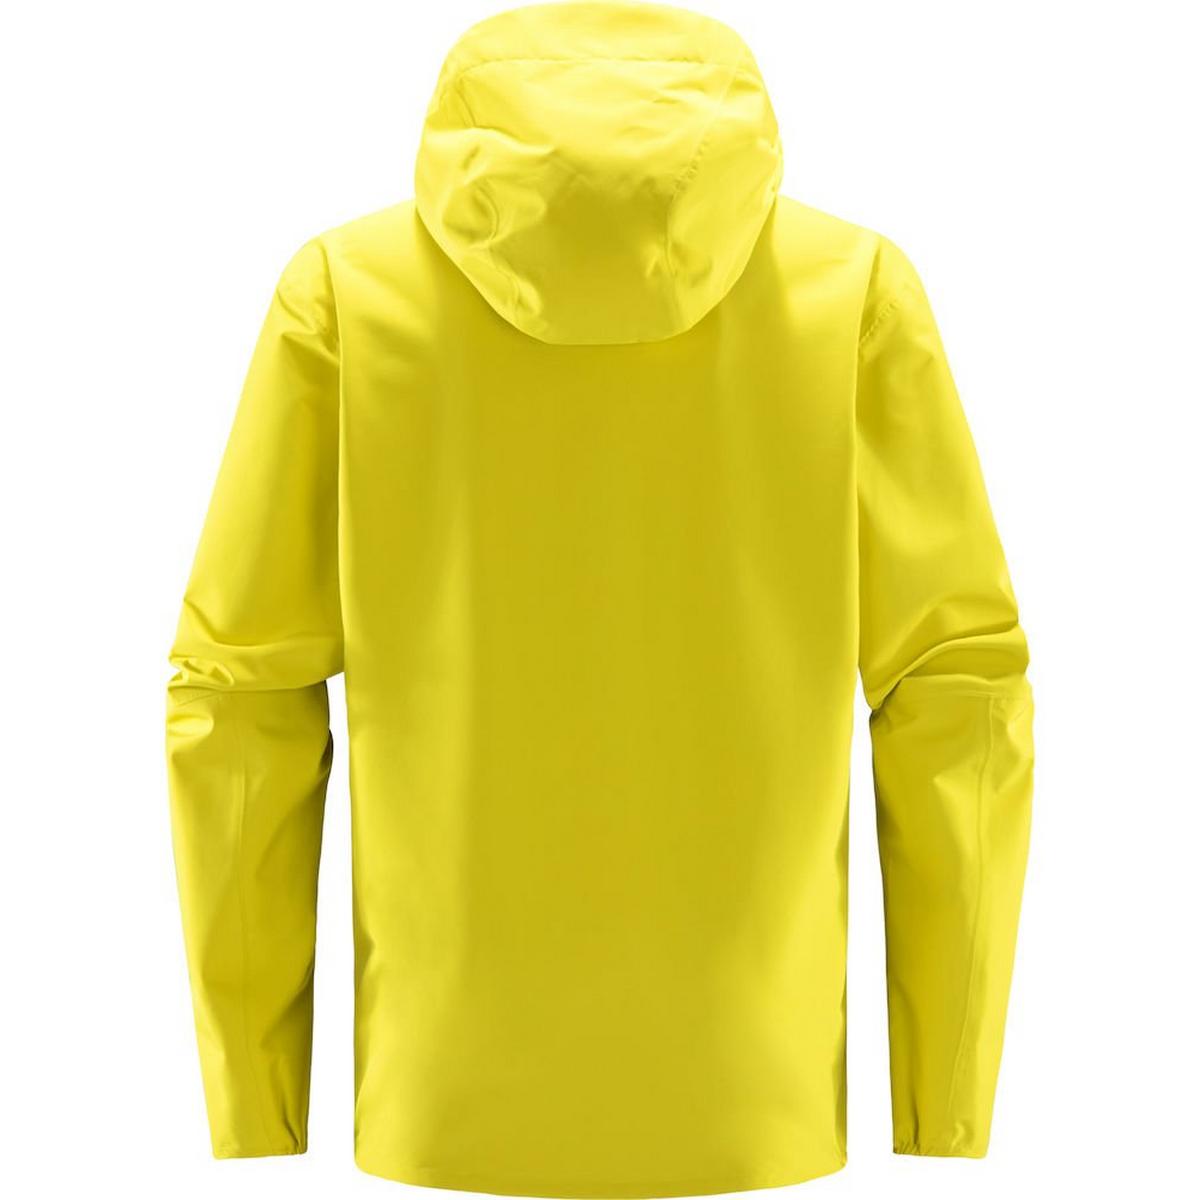 Haglofs Men's Spira Jacket - Yellow